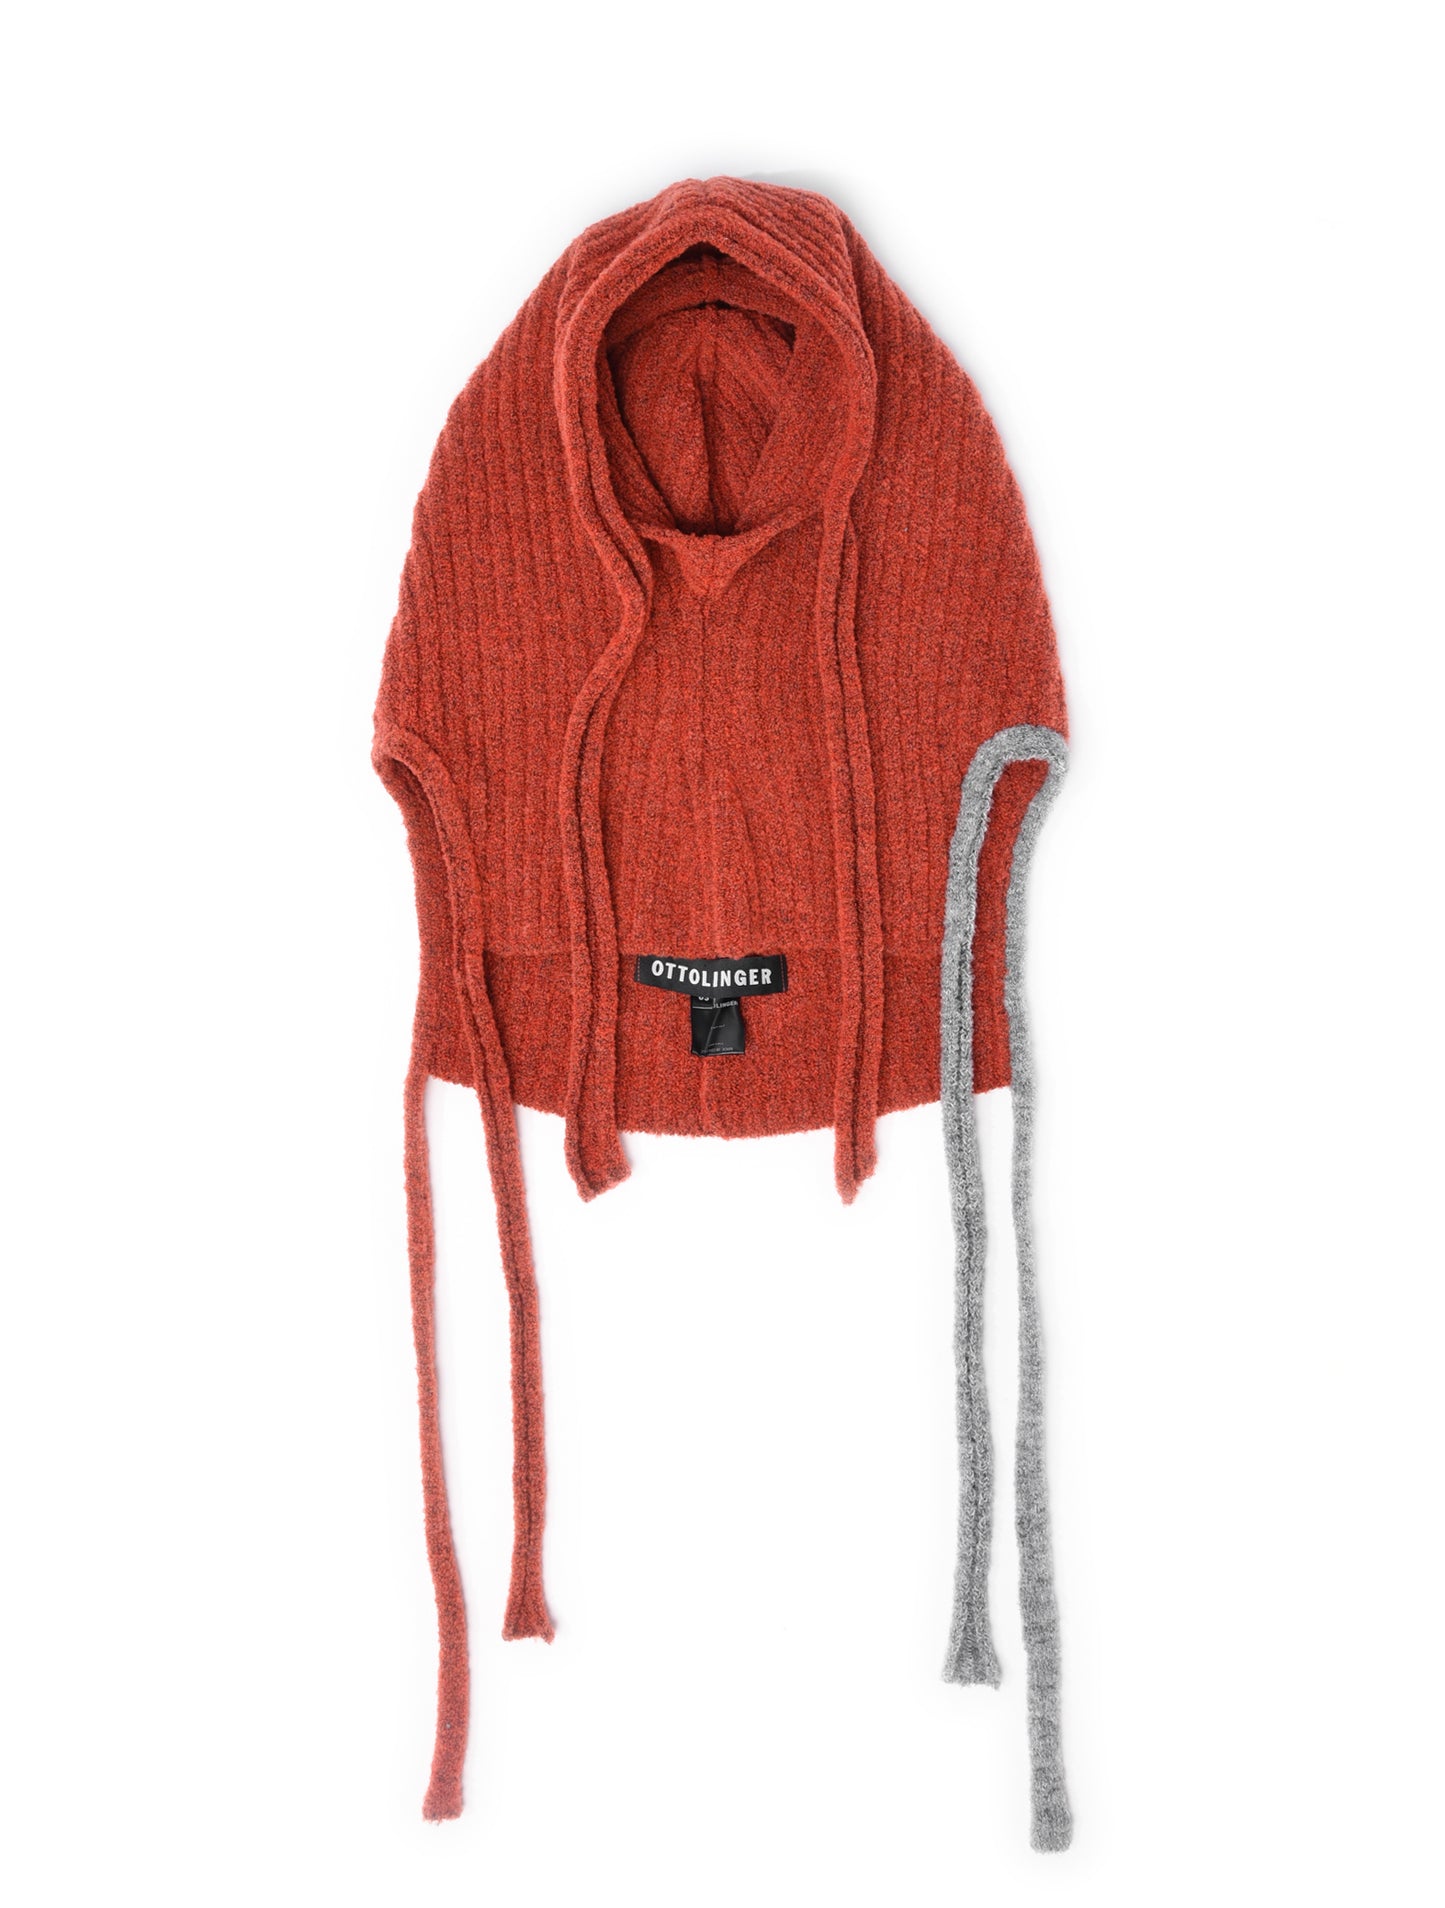 Ottolinger Boucle Knit Red Hood